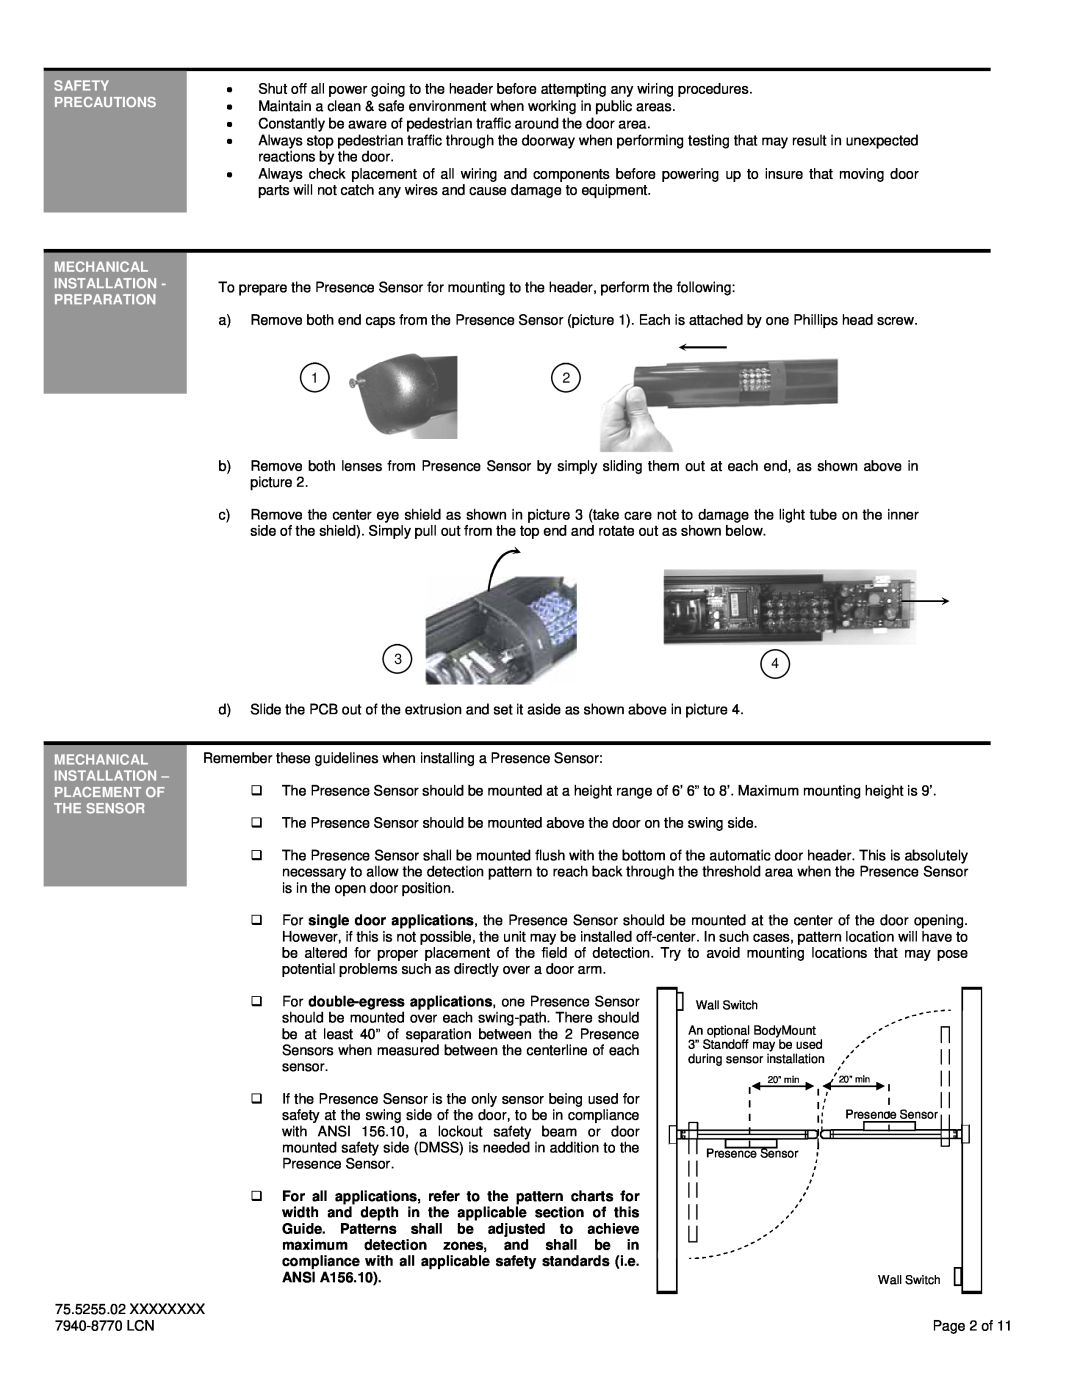 Ingersoll-Rand 7940-8770 installation instructions Safety, Precautions, Mechanical Installation - Preparation 